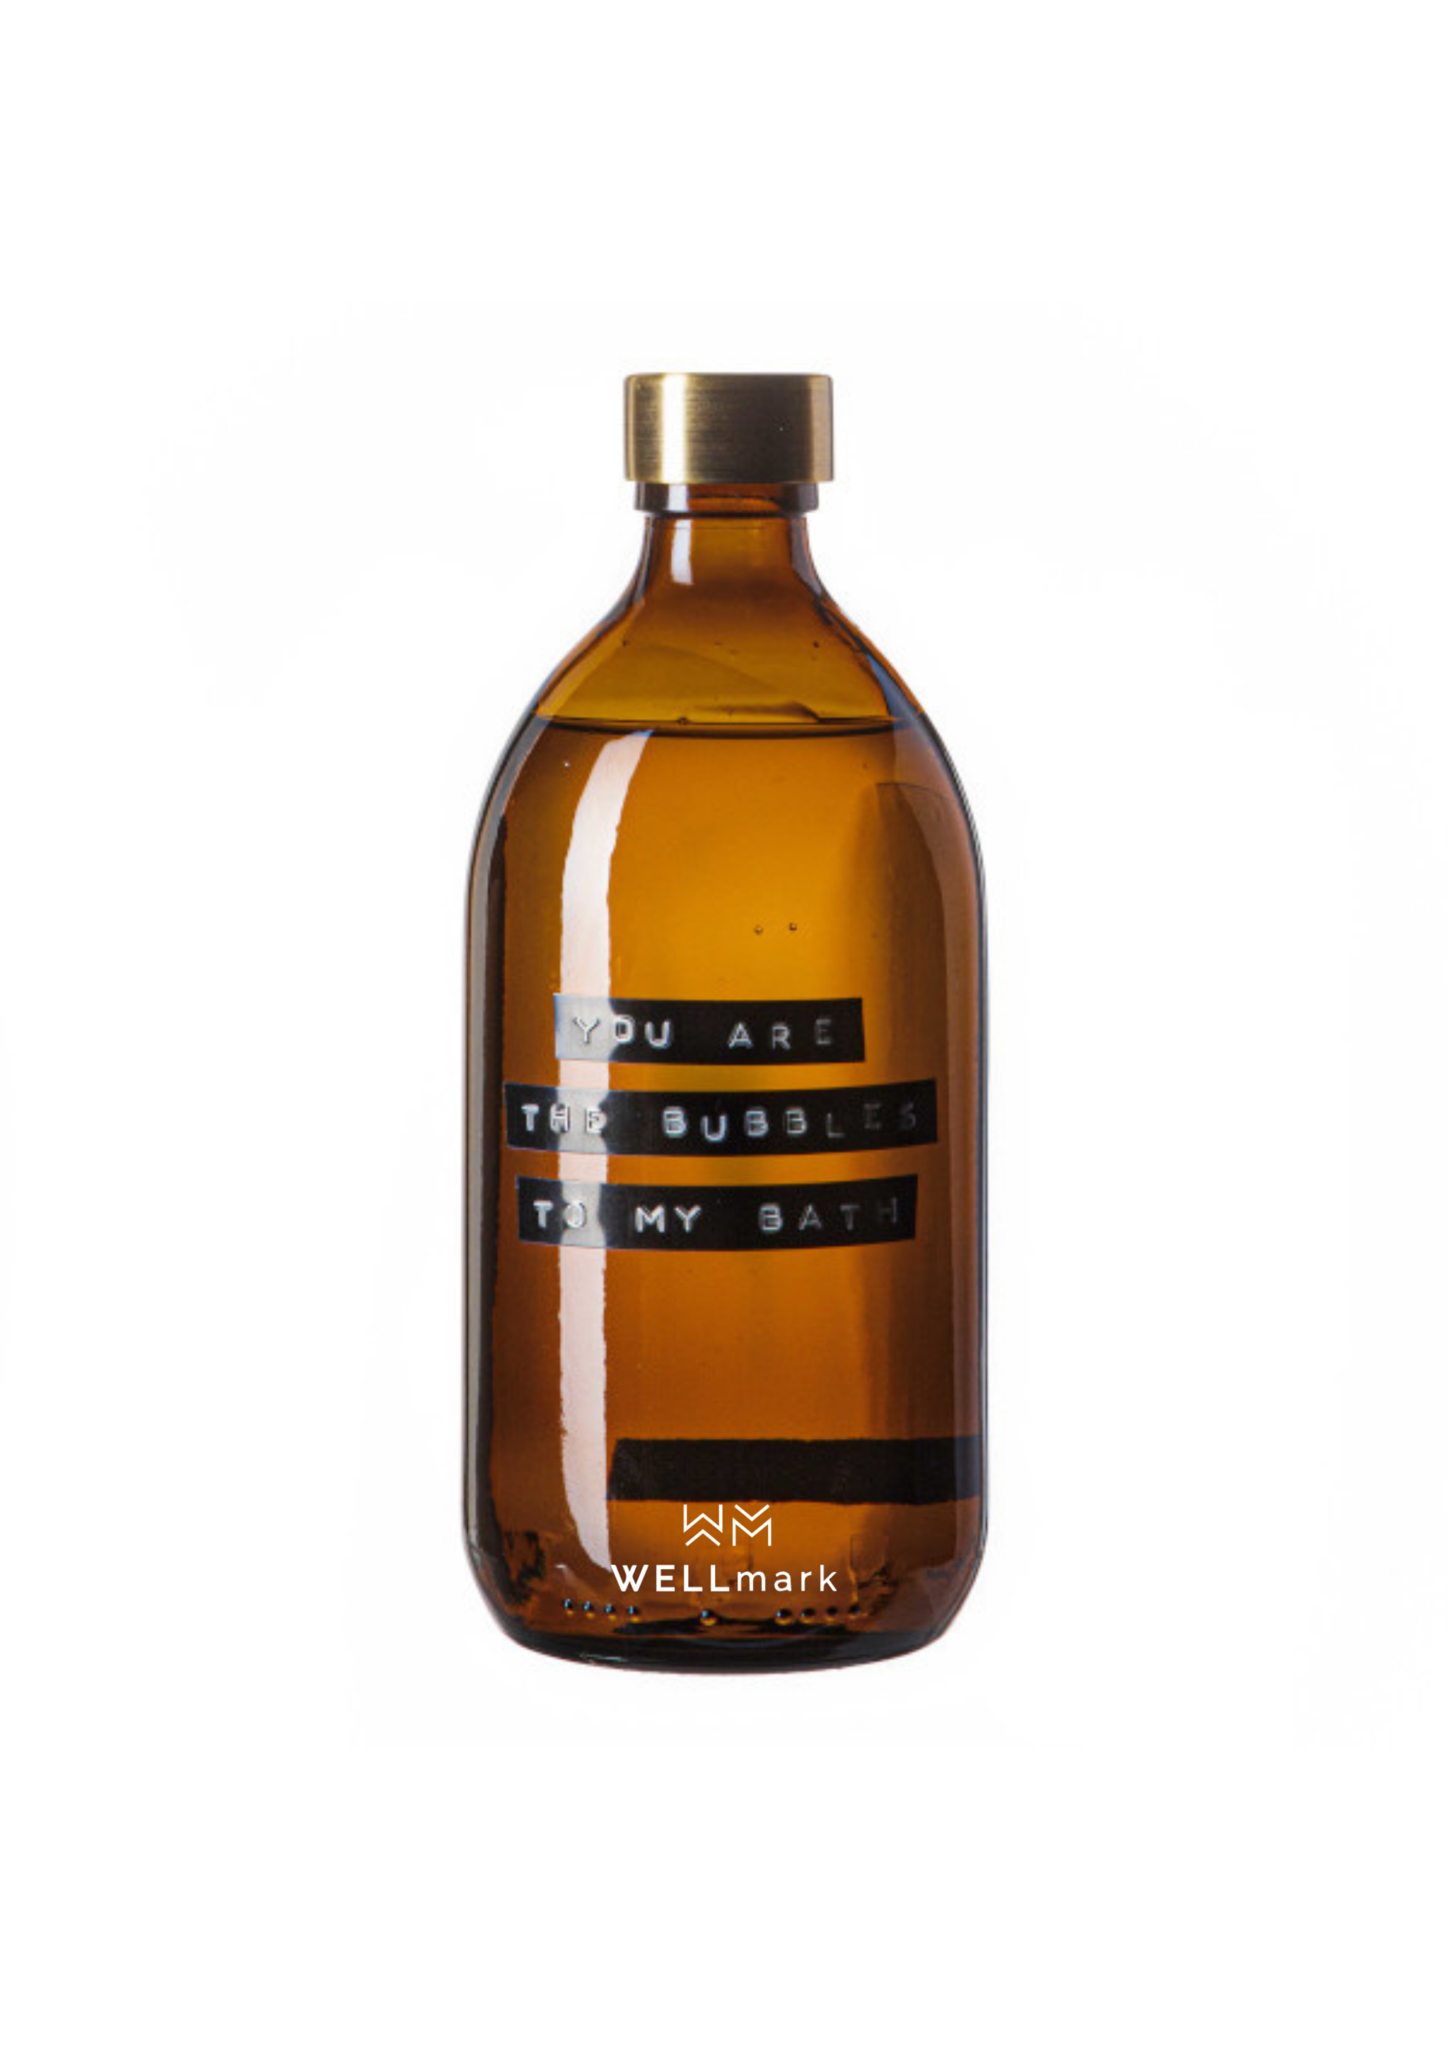 Wellmark - bath soap amber/brass bamboo 500ml - you are the bubbles